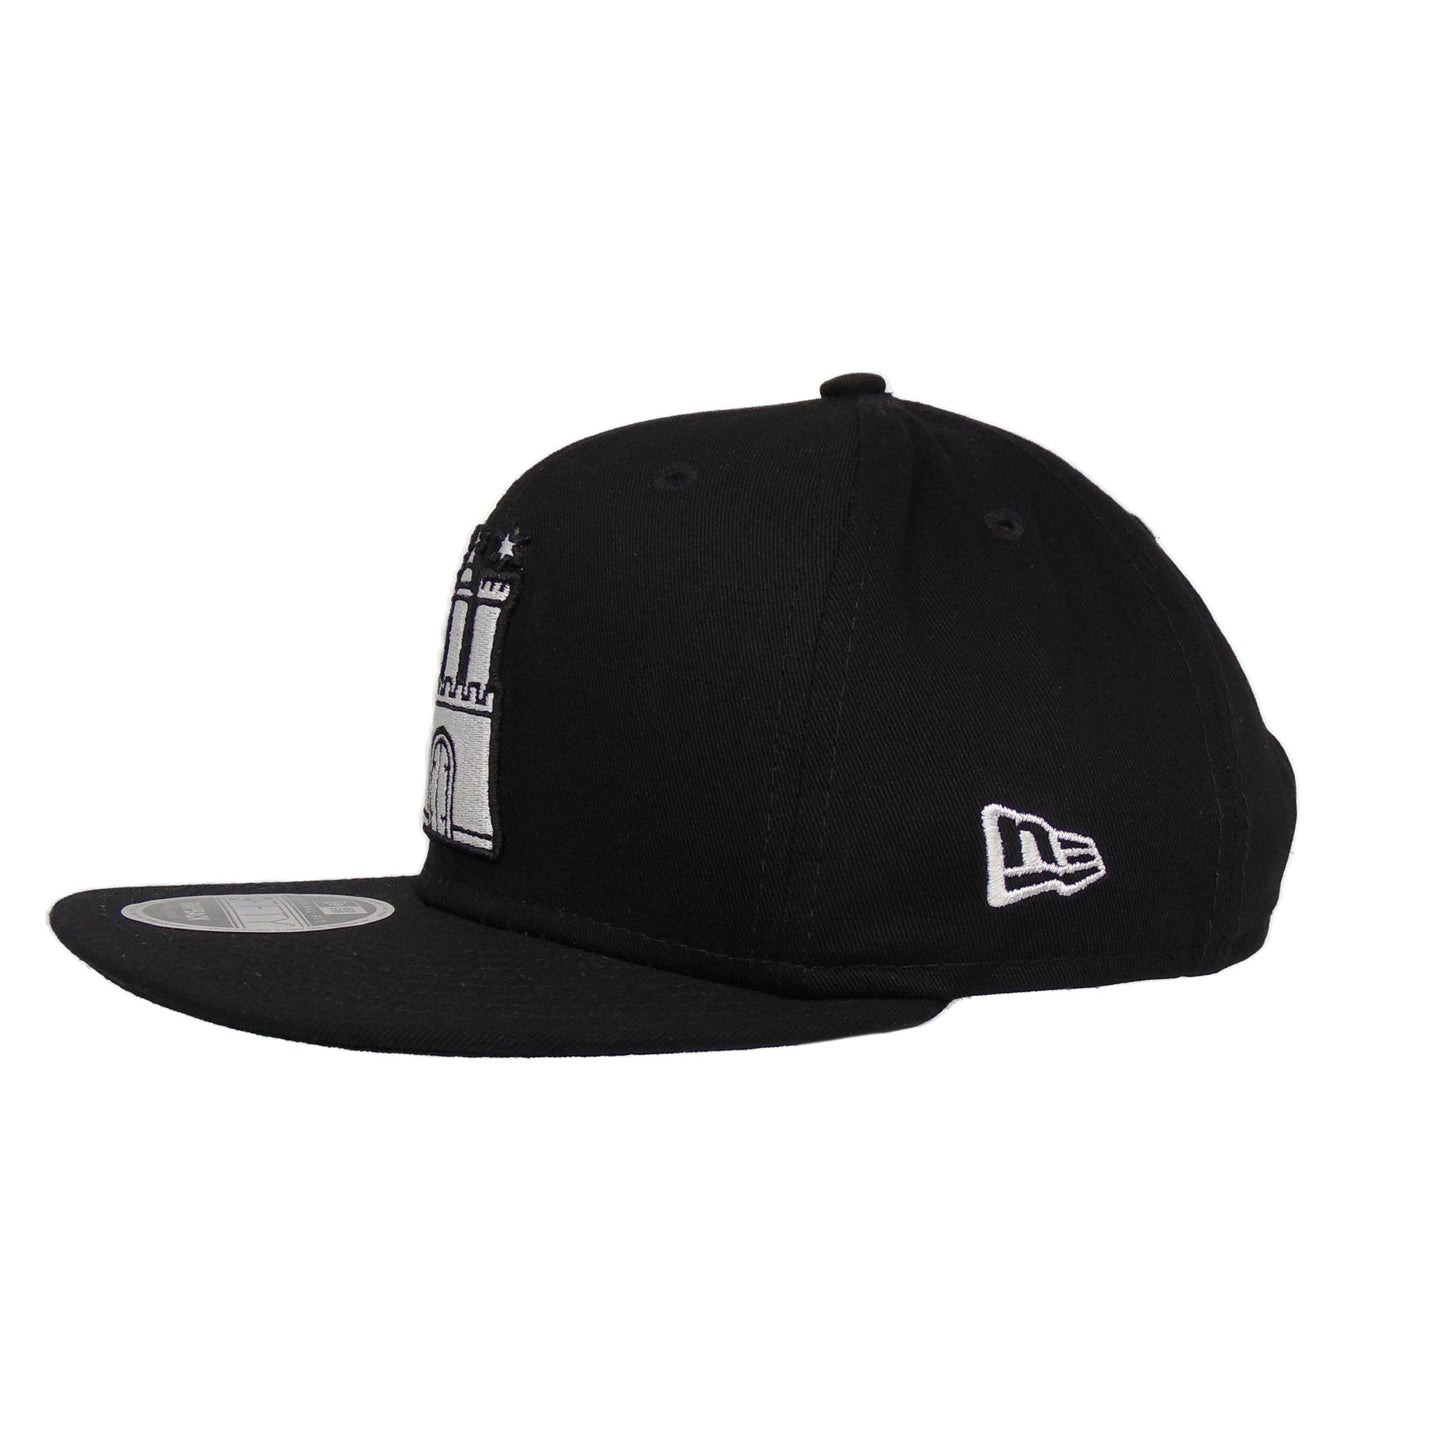 Justfitteds Hammaburg New Era 9FIFTY Snapback Cap black